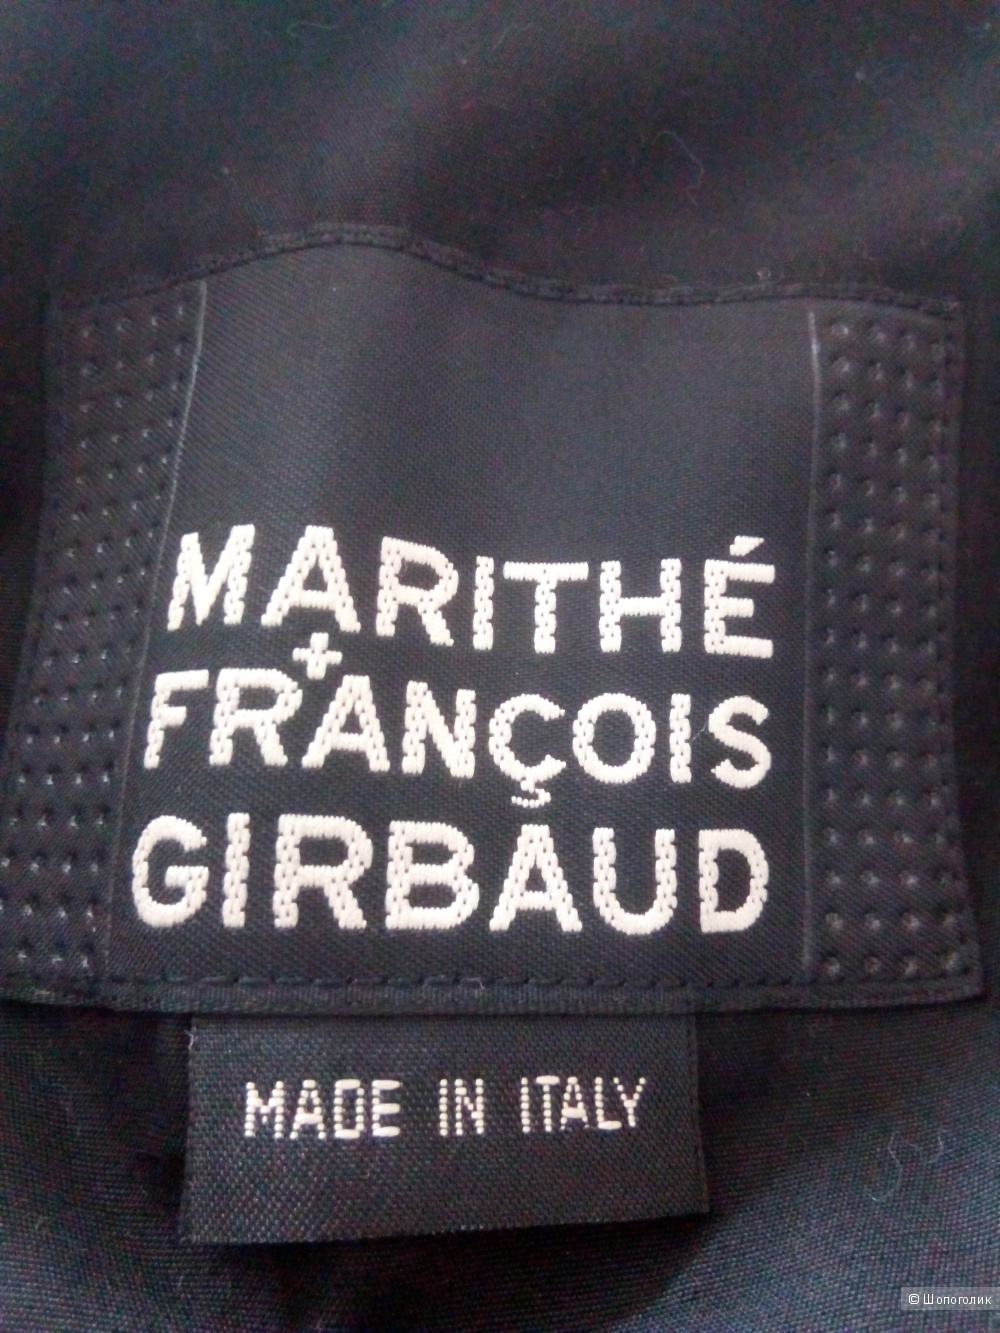 Куртка- бомбер  MARITHÉ + FRANÇOIS GIRBAUD , размер  42